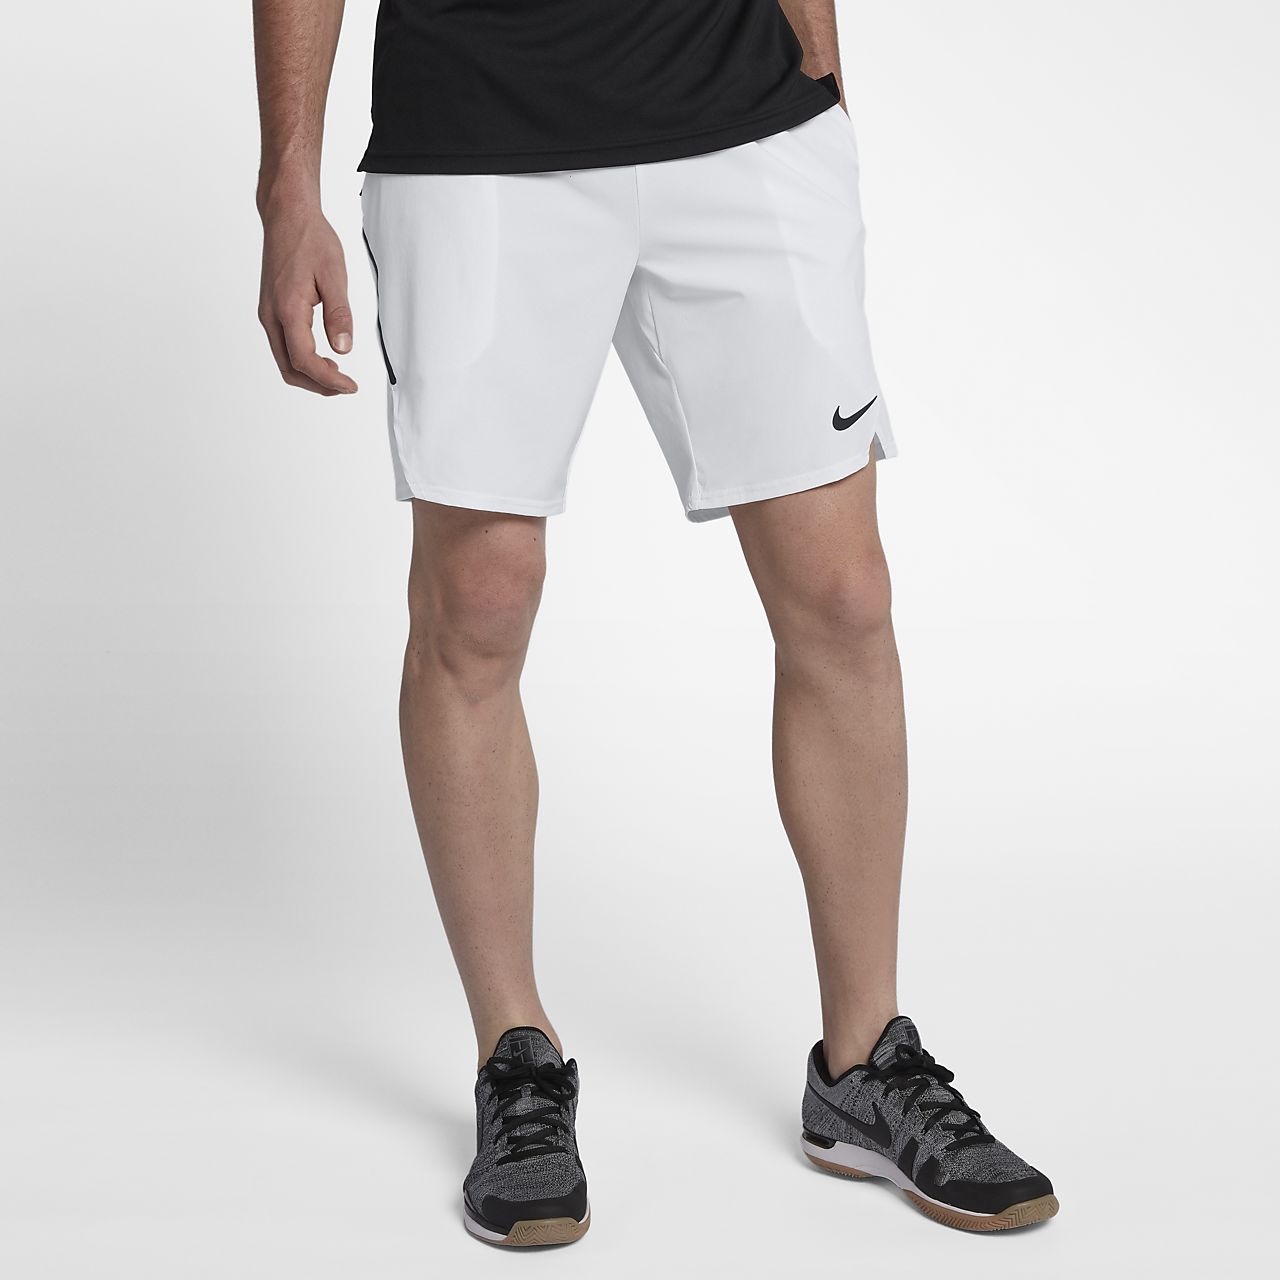 nike court flex ace 9 inch tennis shorts